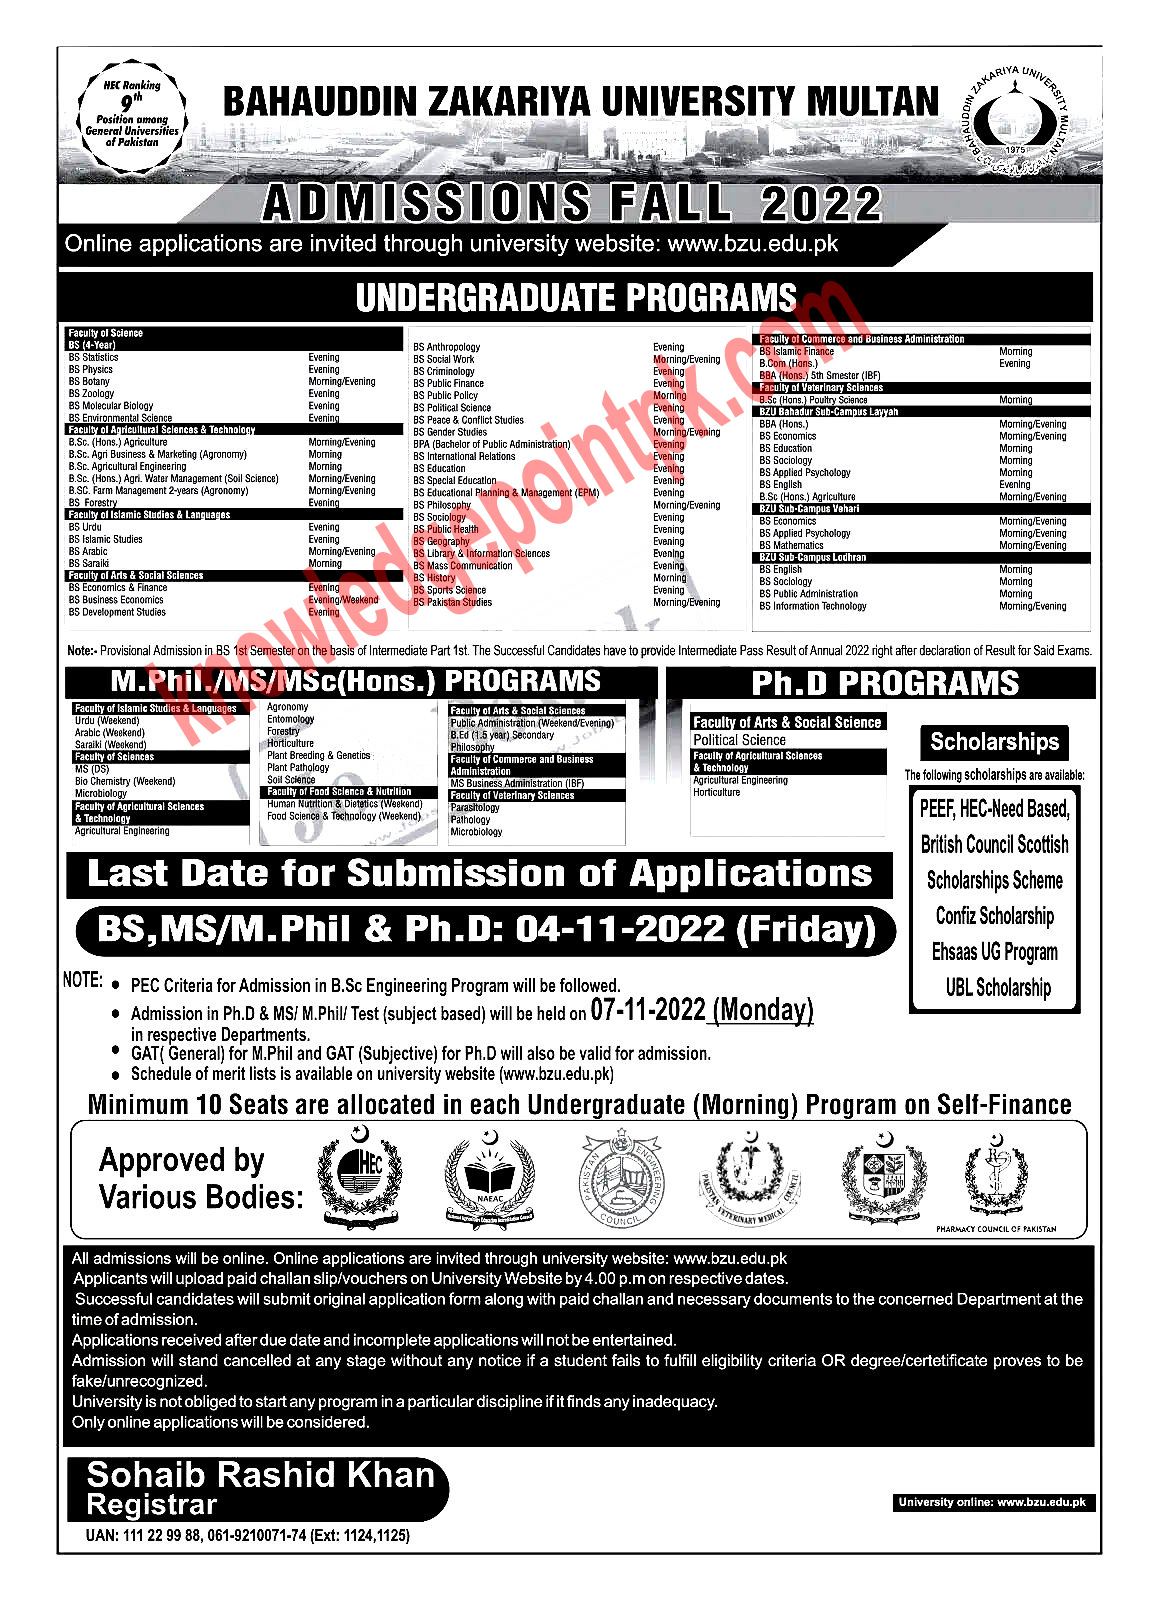 BZU Multan Fall 2022 Admissions Notice- Check Programs & Online Apply